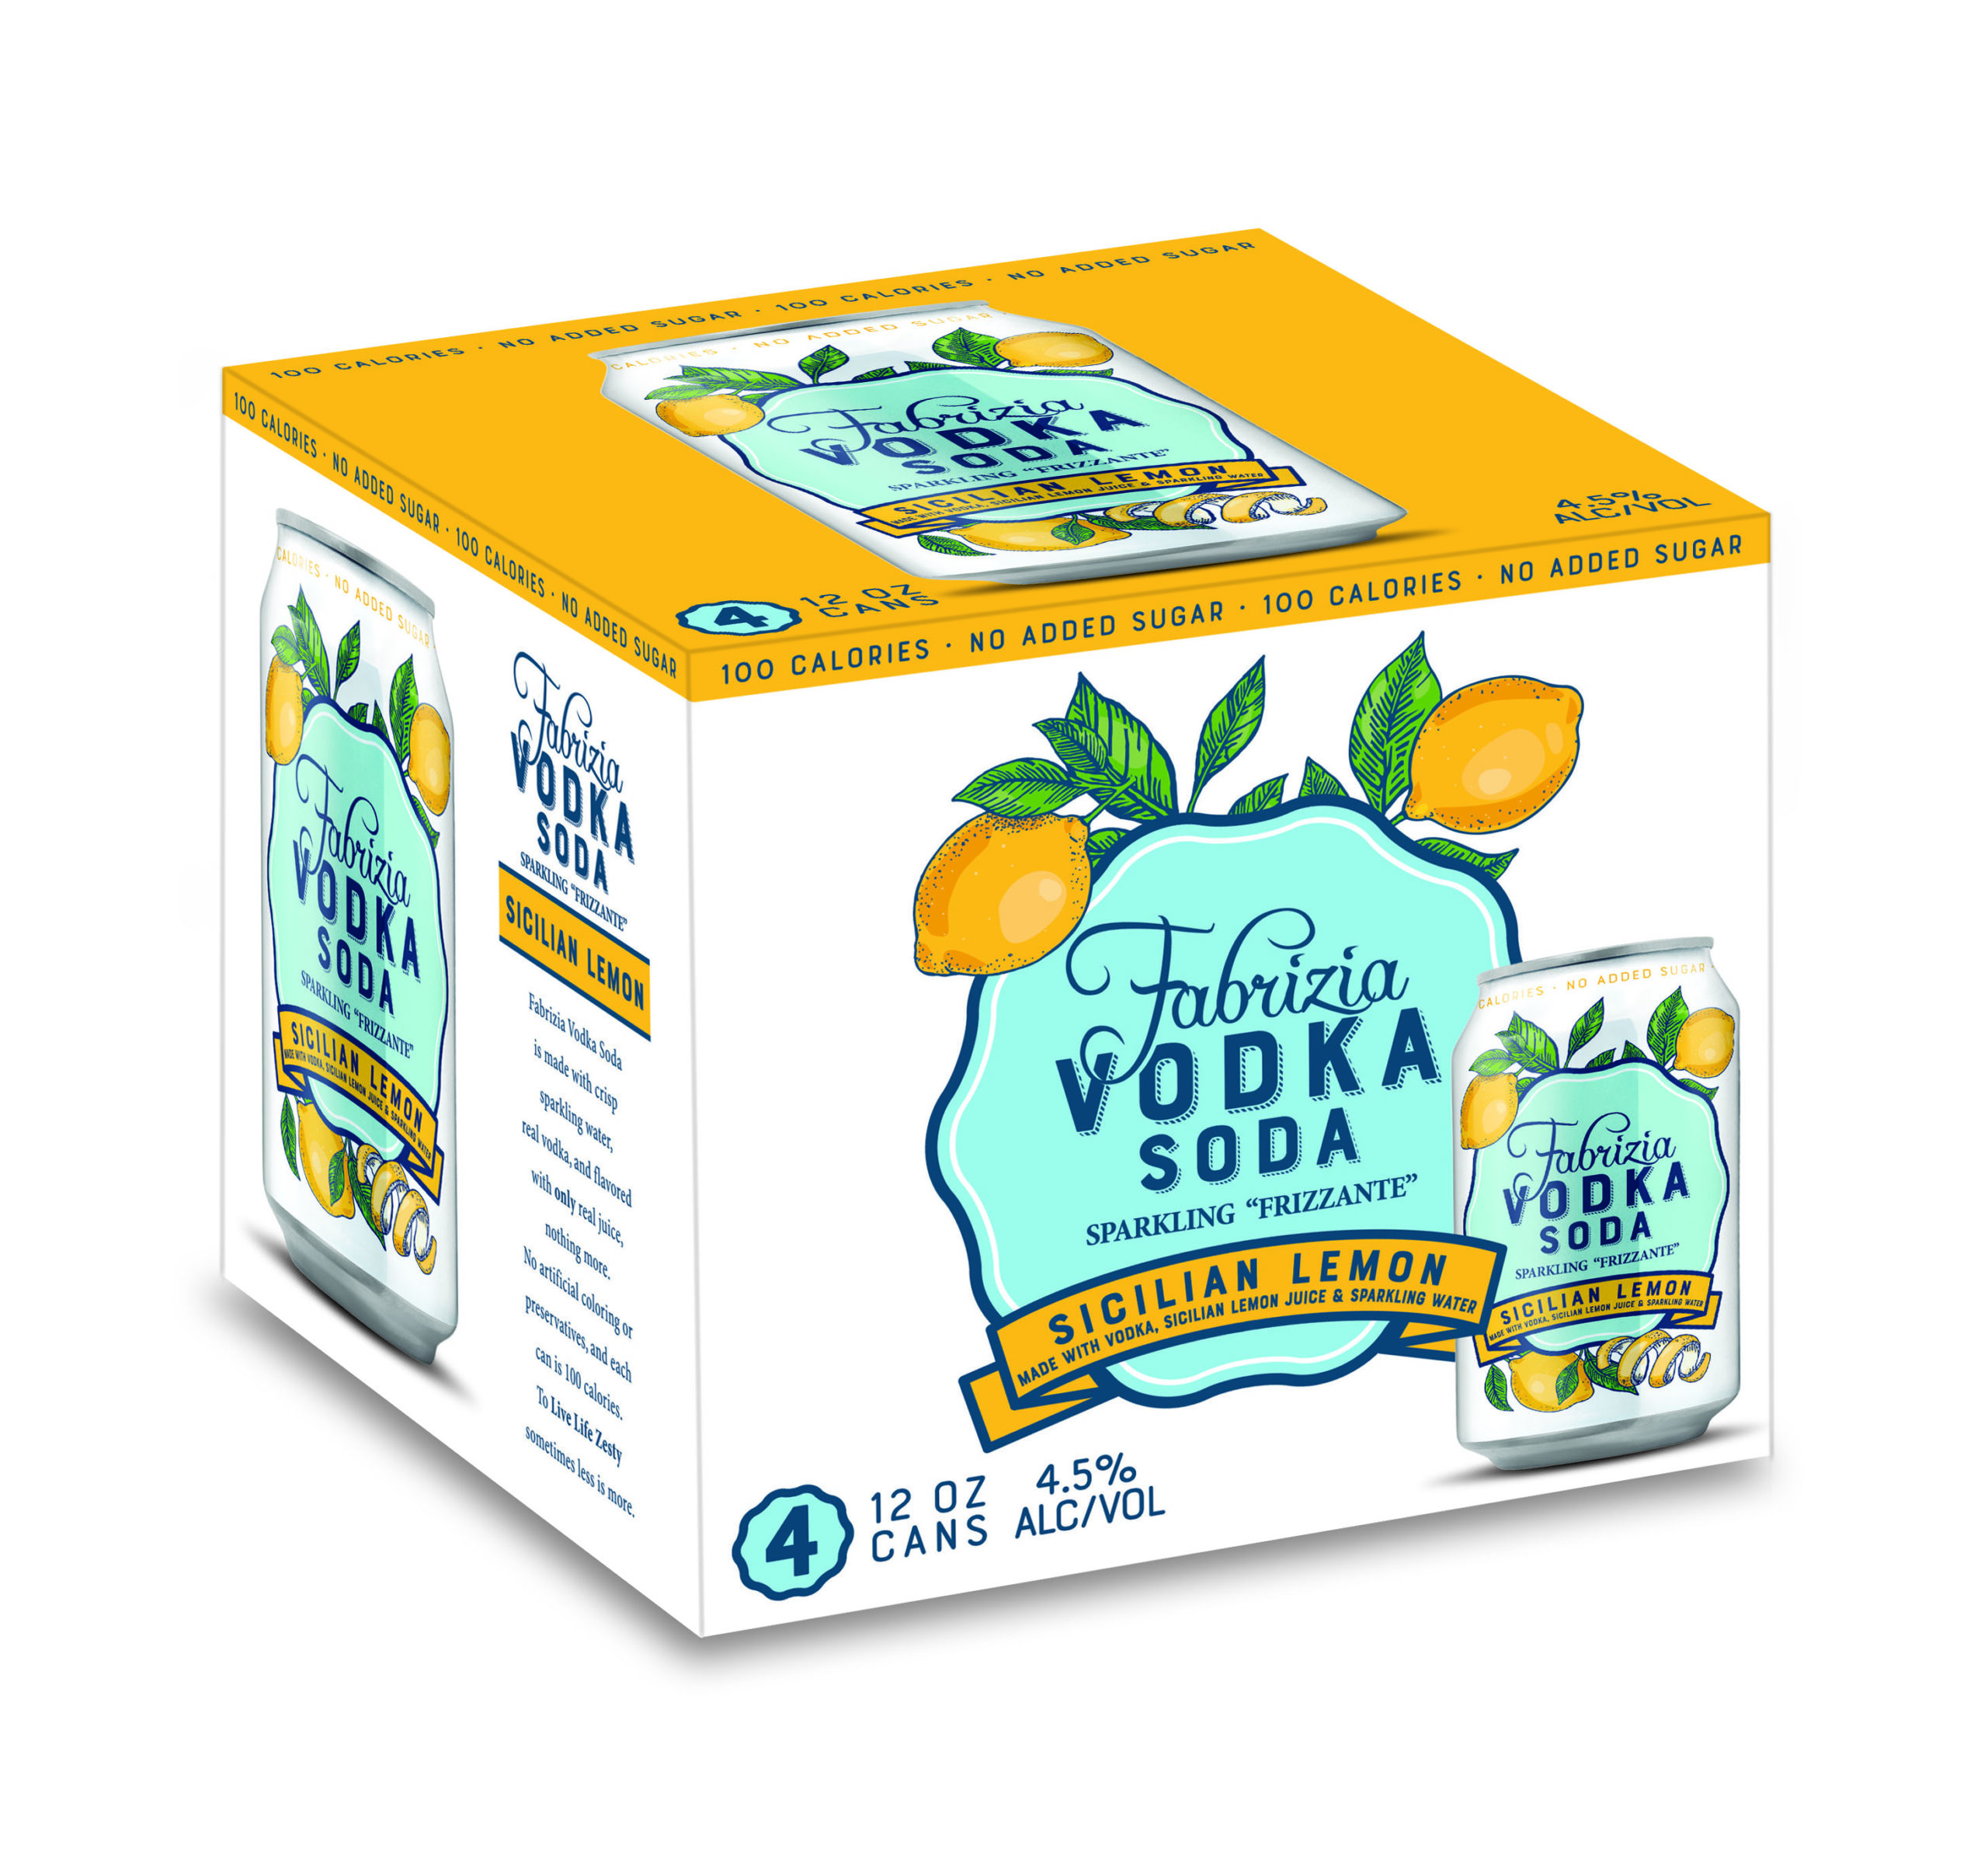 Fabrizia Vodka Soda Sicilian Lemon 4 Pack Cans / 4-355mL - Marketview Liquor